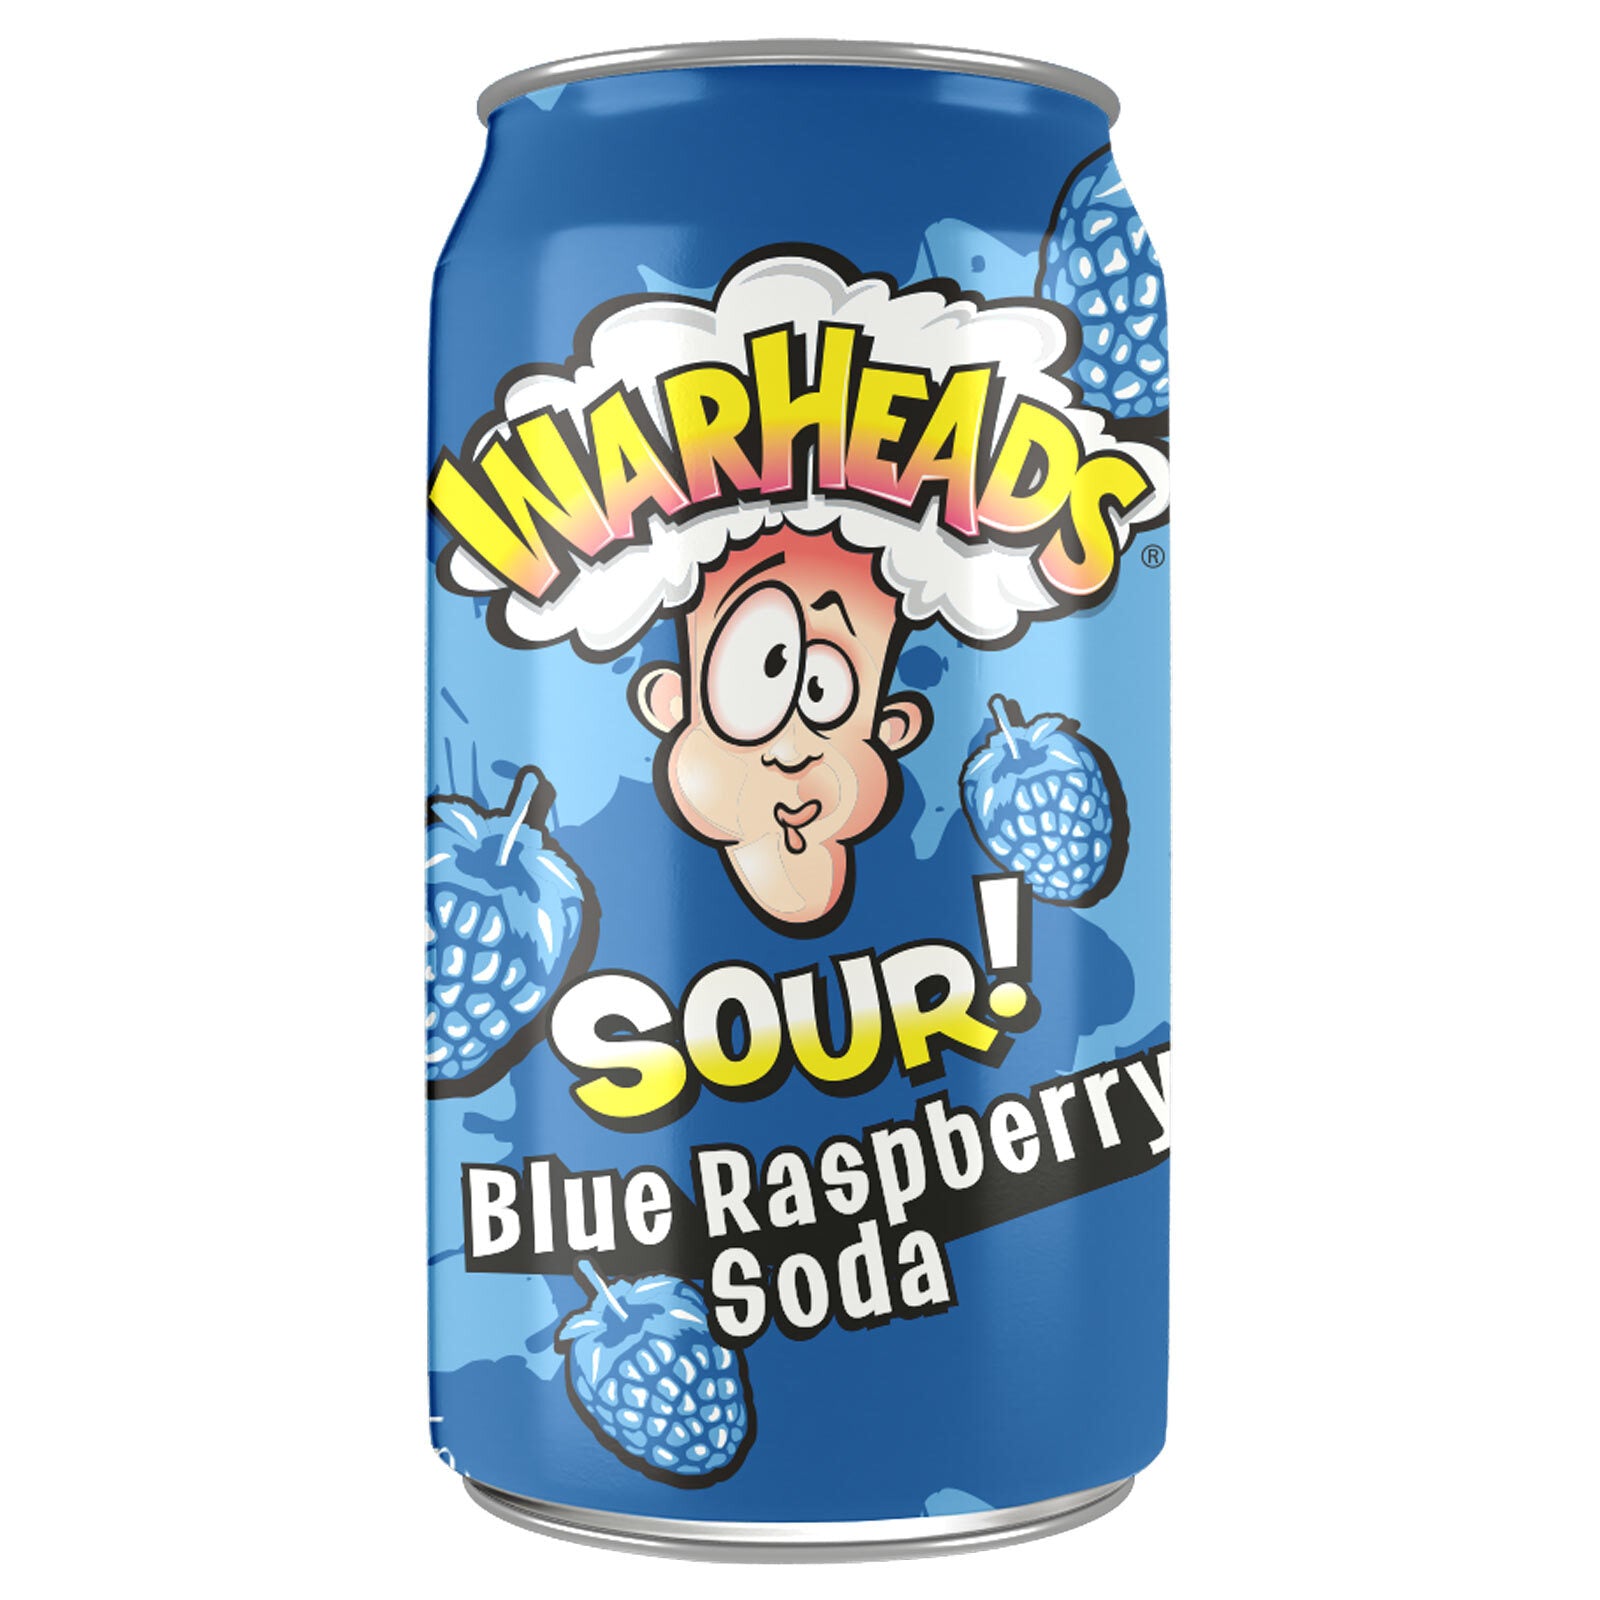 Warheads Sour! Blue Raspberry Soda